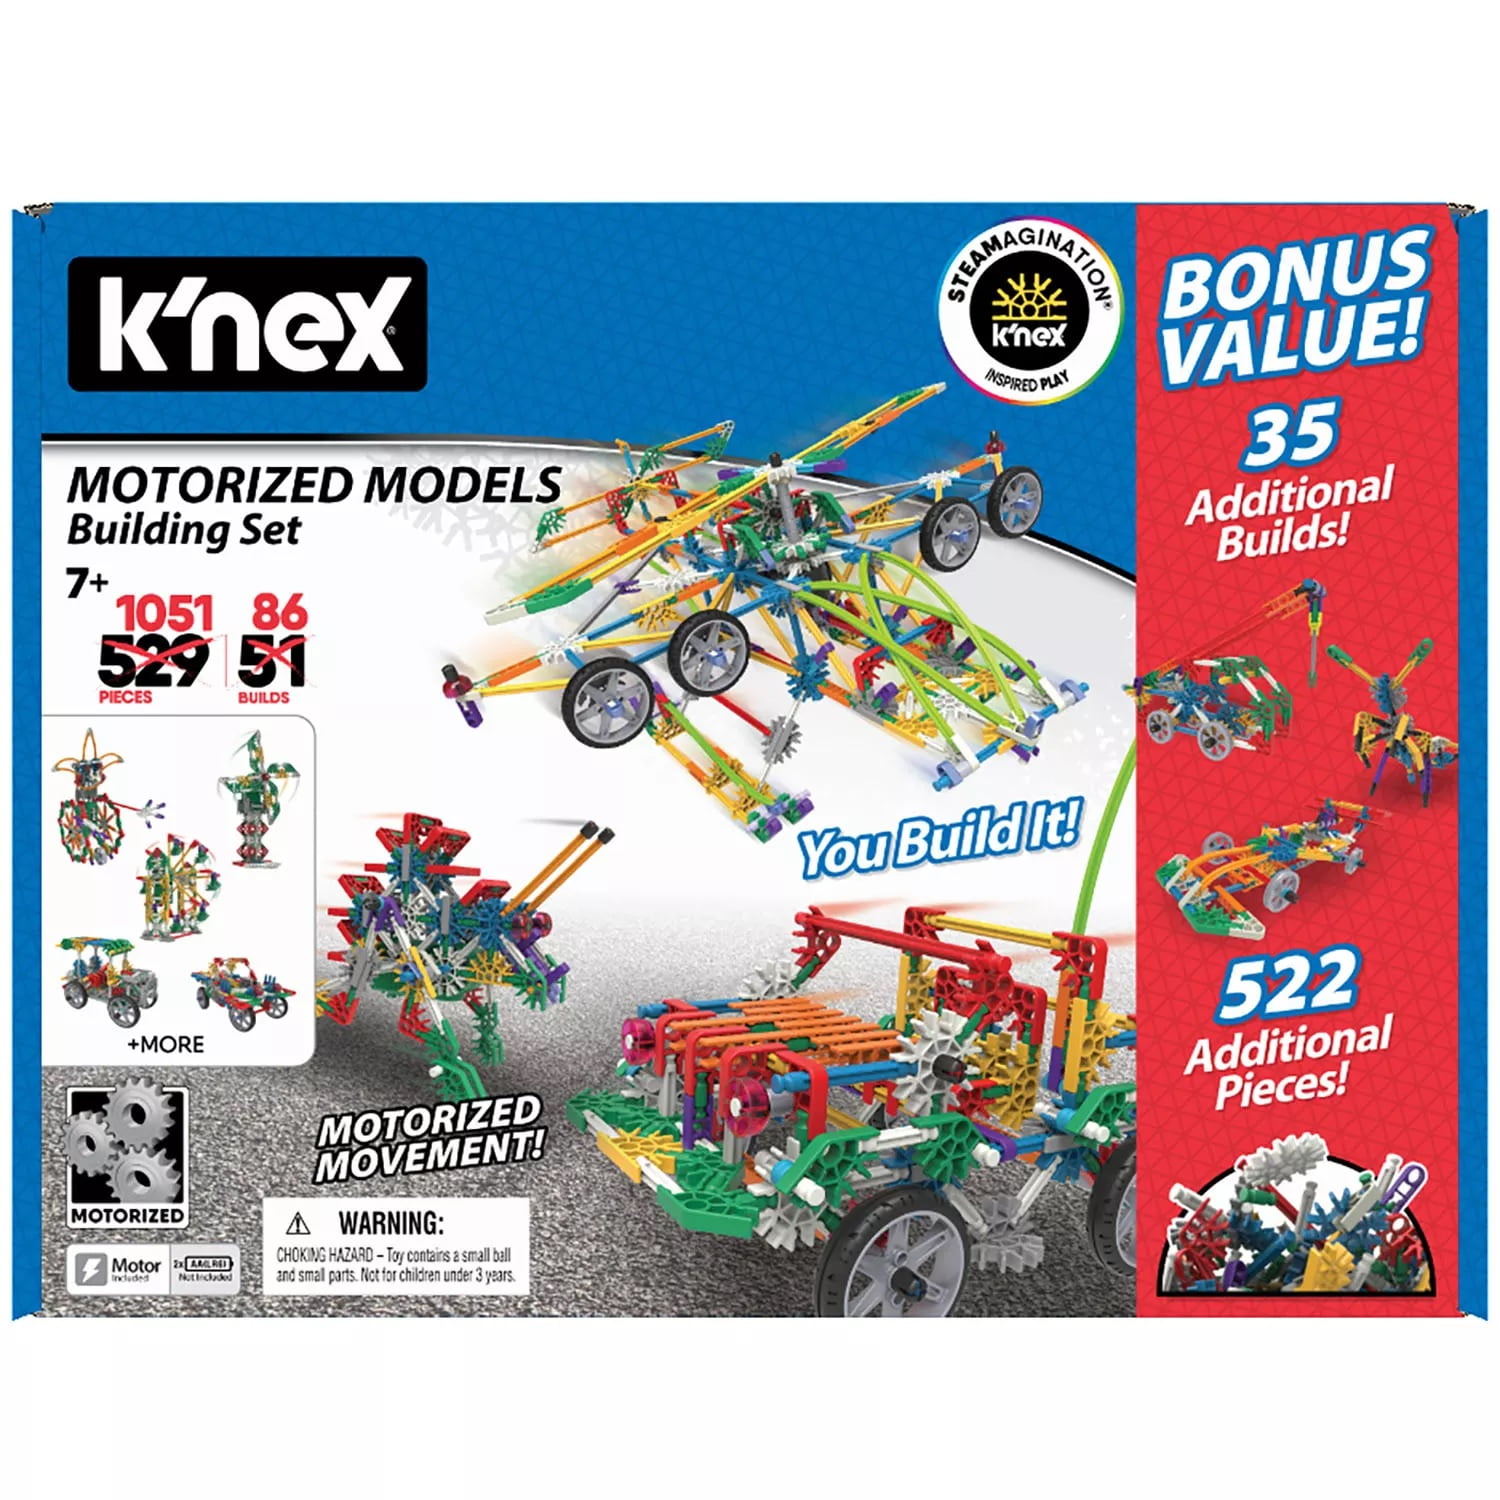 Imagine Thrill Rides Kid Knex K'NEX Bulding Sets Choose from 26 kits STEM 